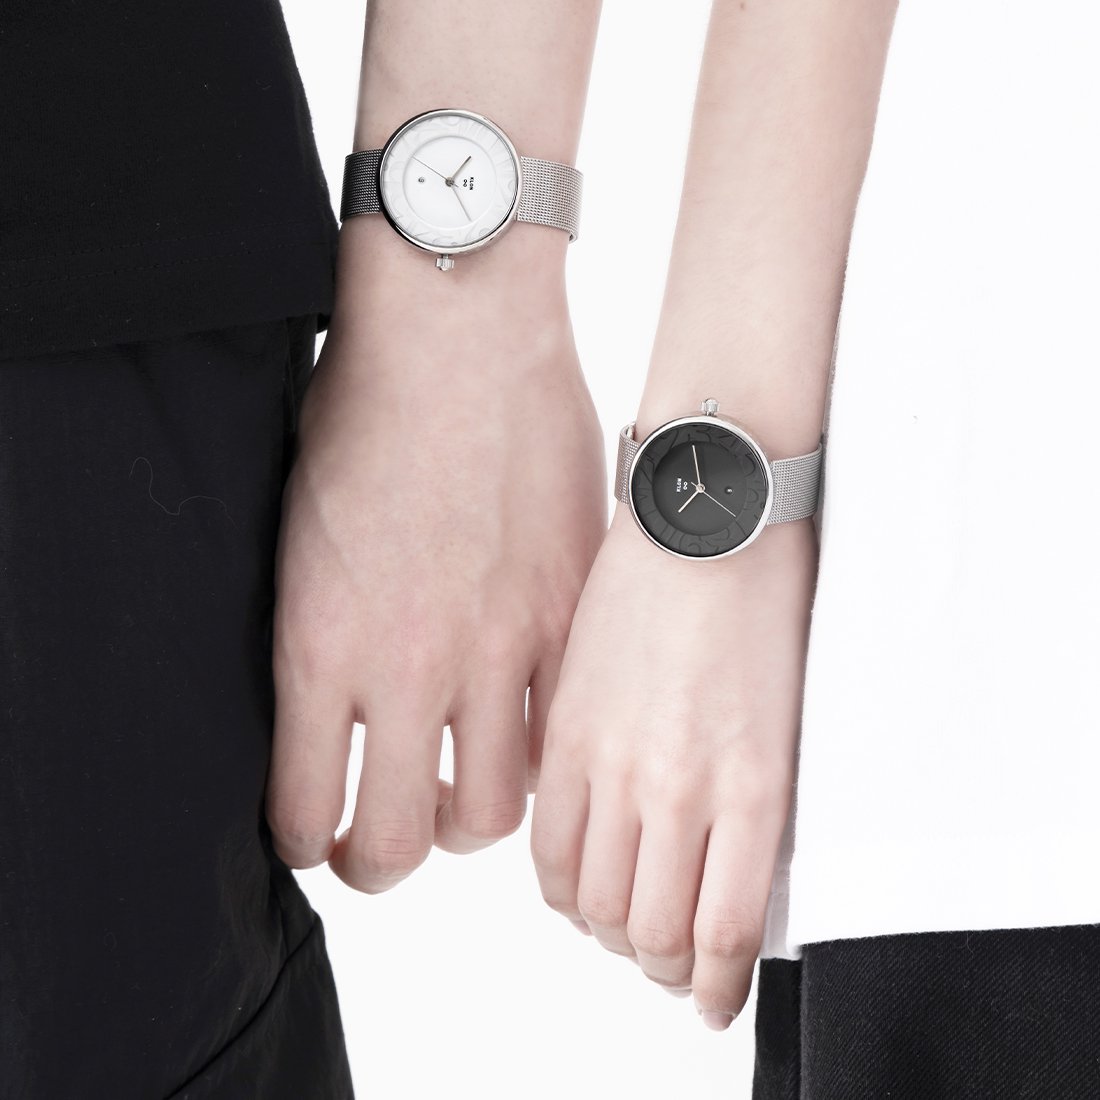 KLON INFINITY STAIR series -RONDO TIME- [36/B-FACE] カジュアル 腕時計